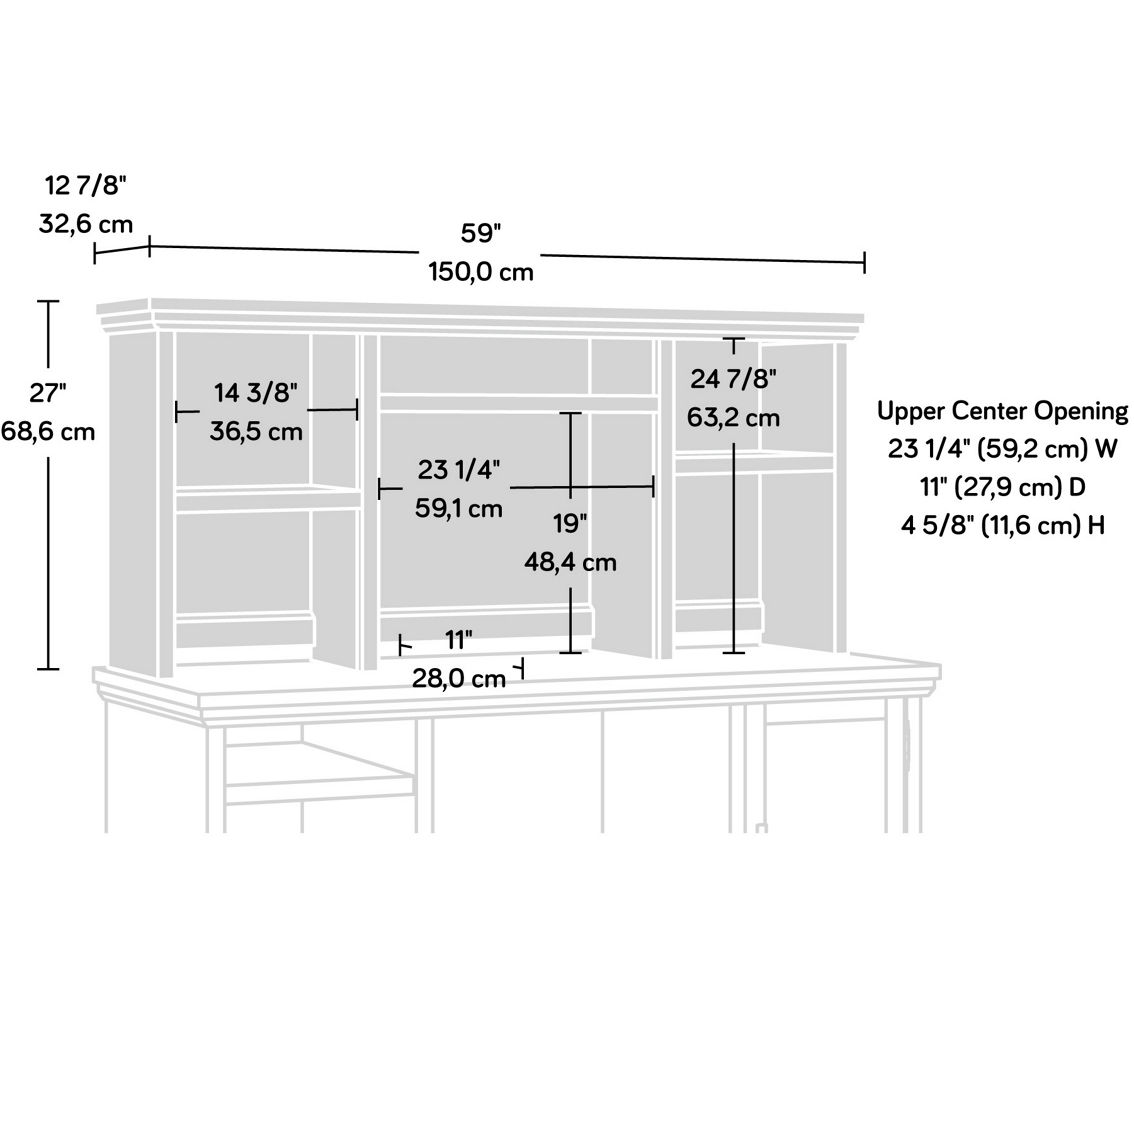 Sauder Desktop Hutch with Shelves in Pebble Pine - Image 2 of 2